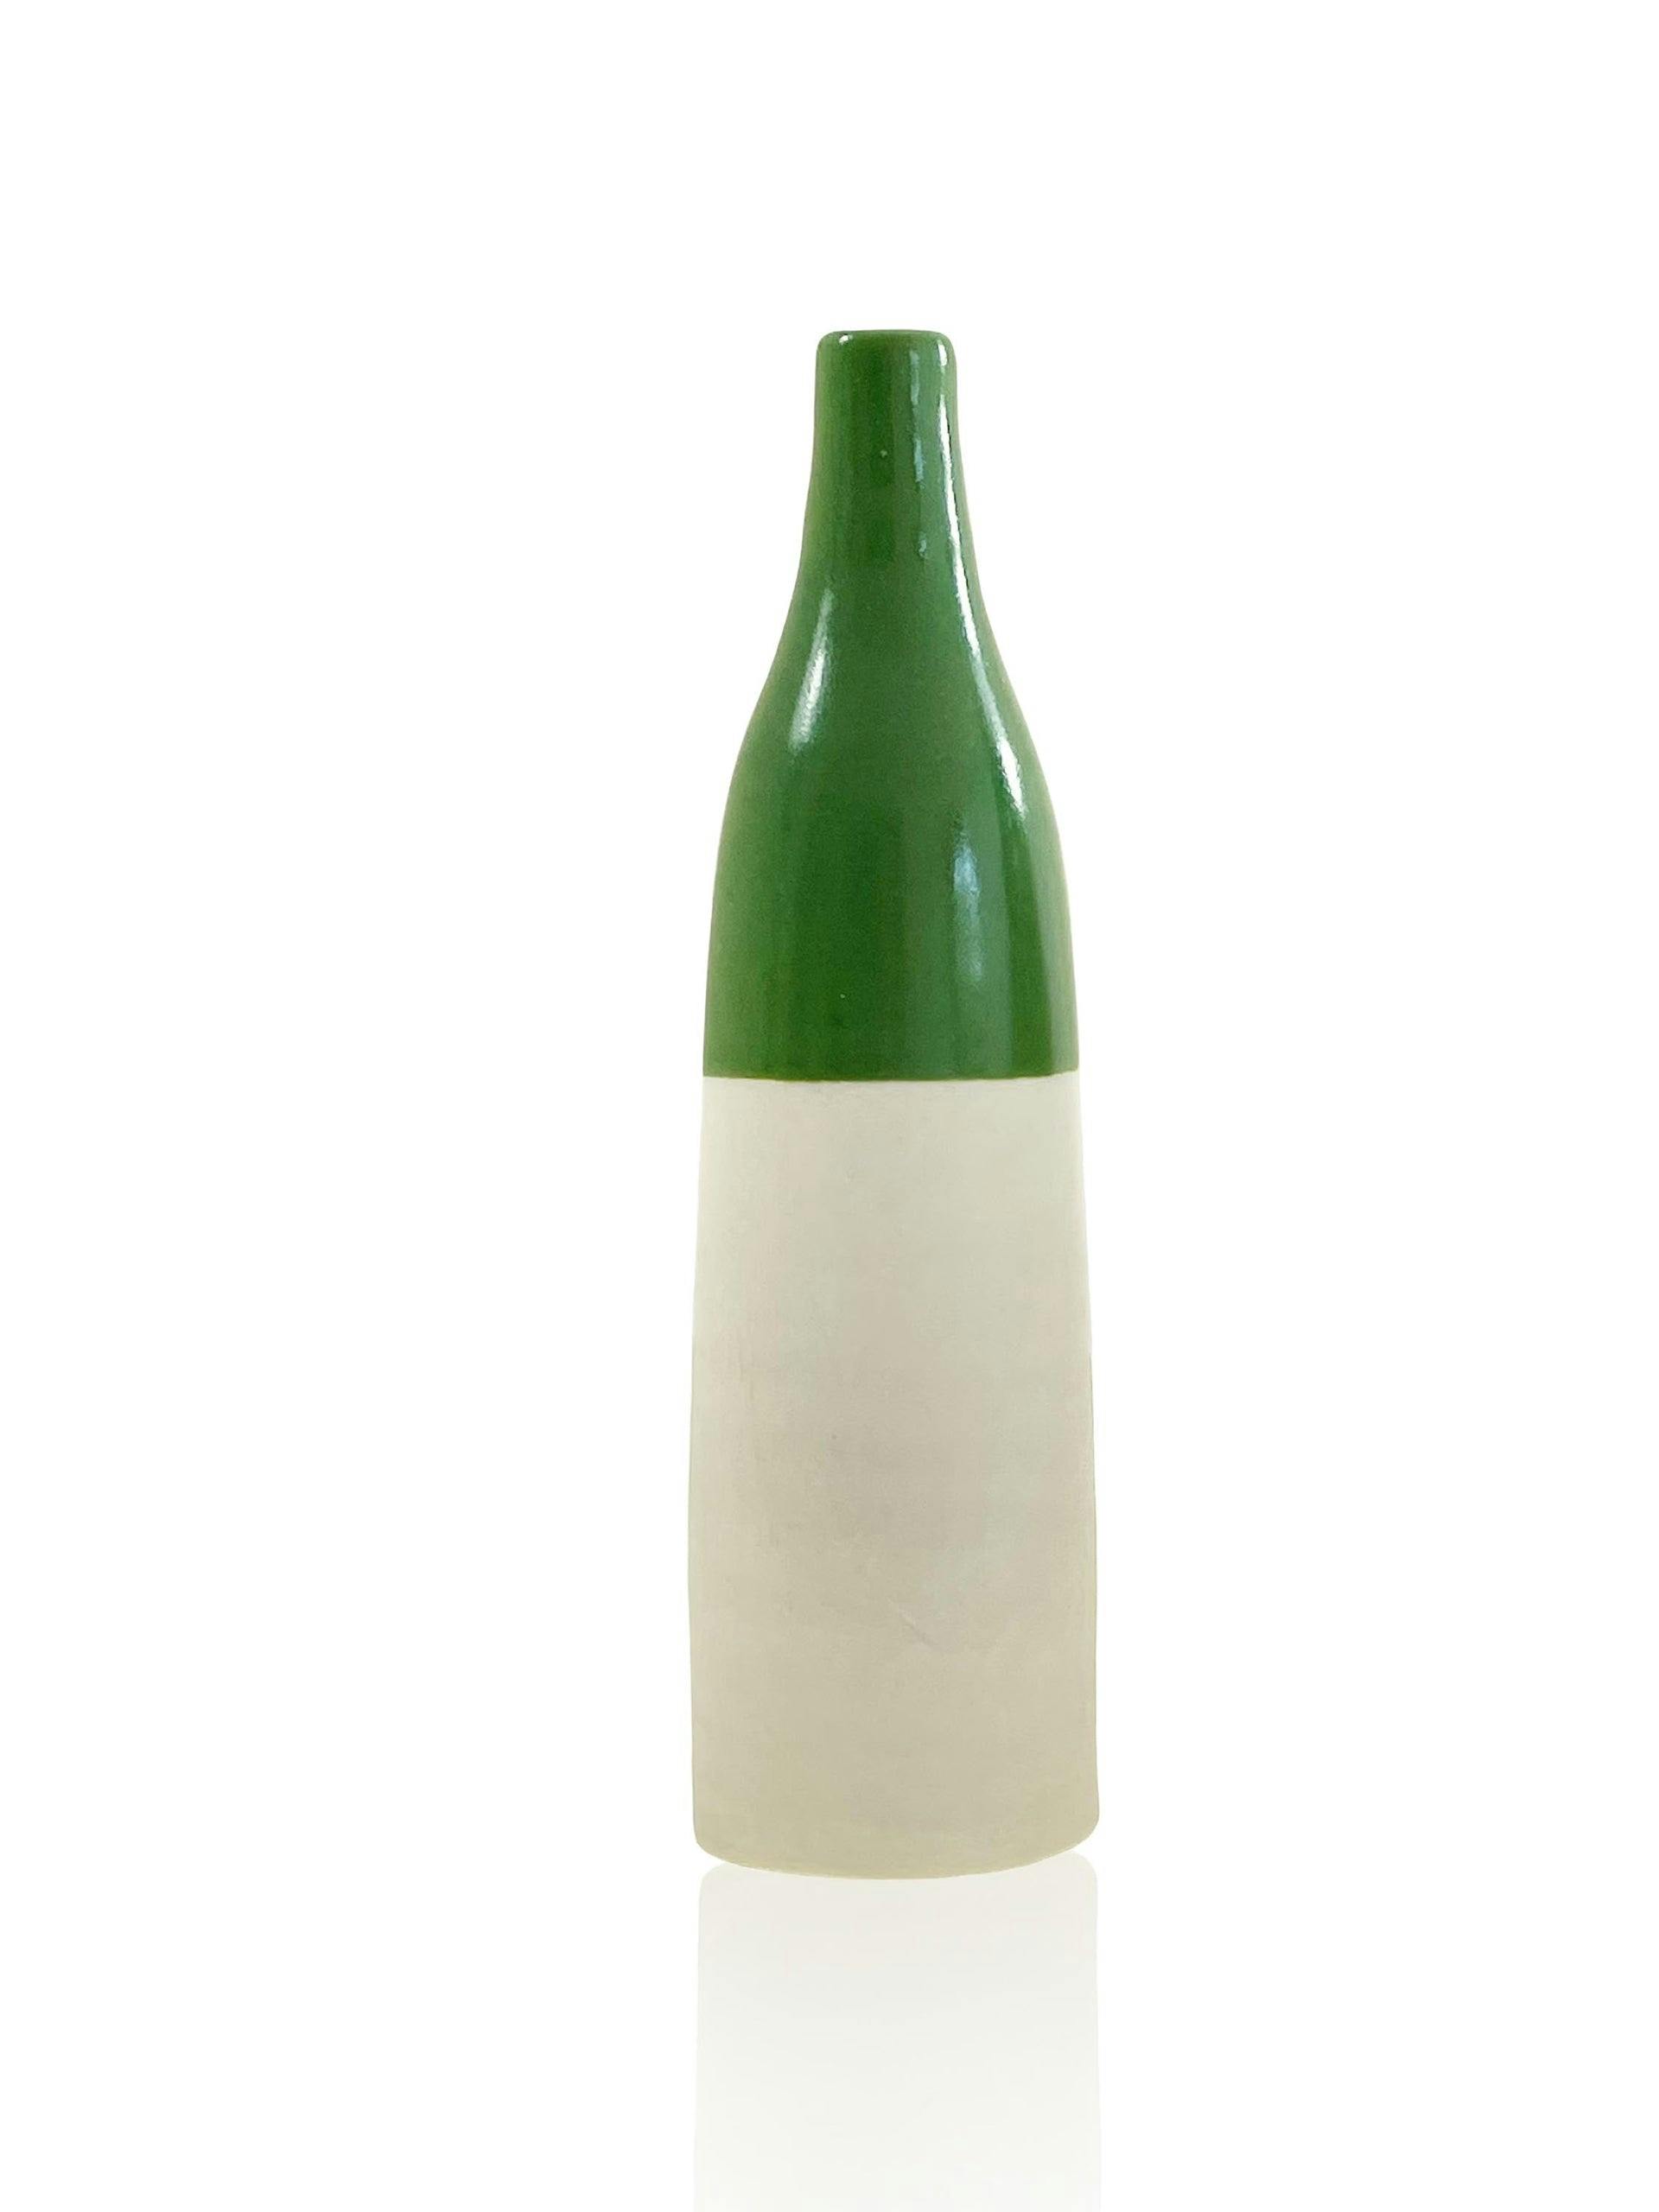 Ceramic Bottle Bud Vase in Spring Green